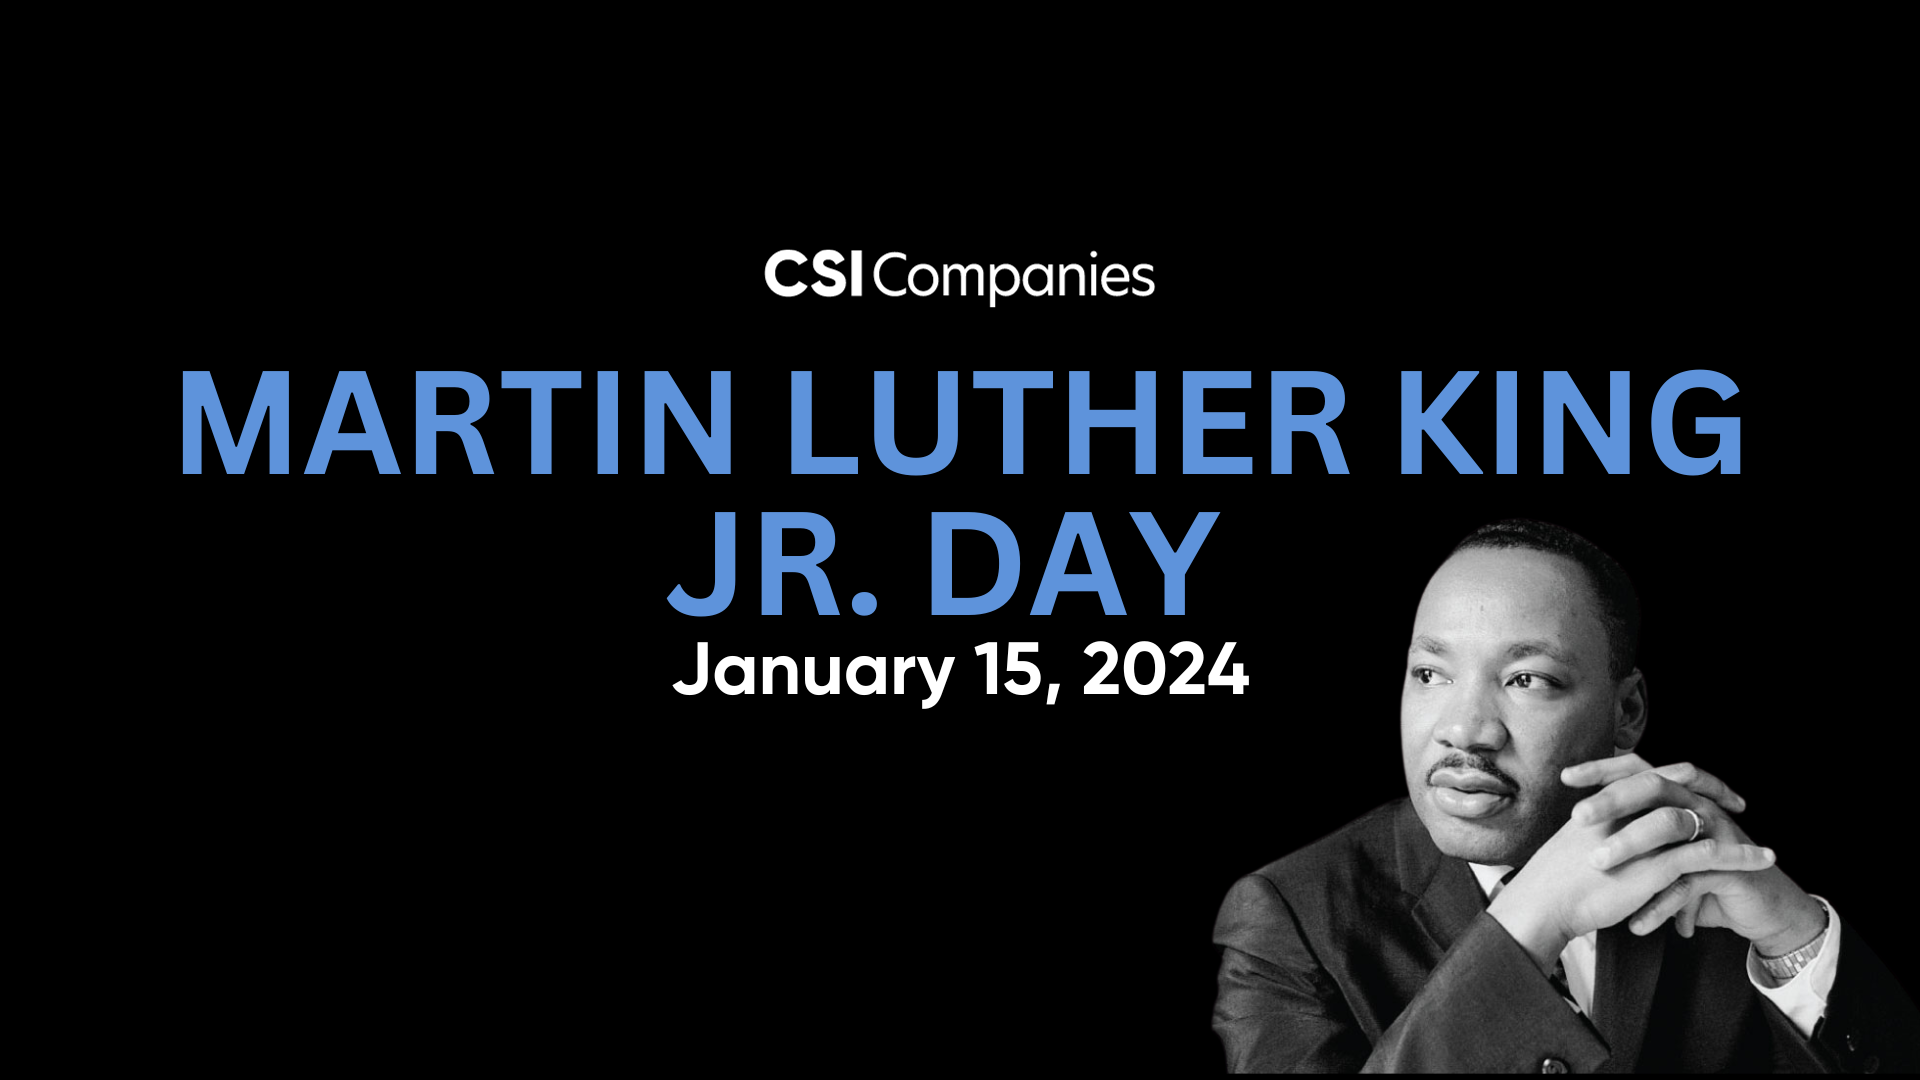 Martin Luther King Jr Day 2024 CSI Companies